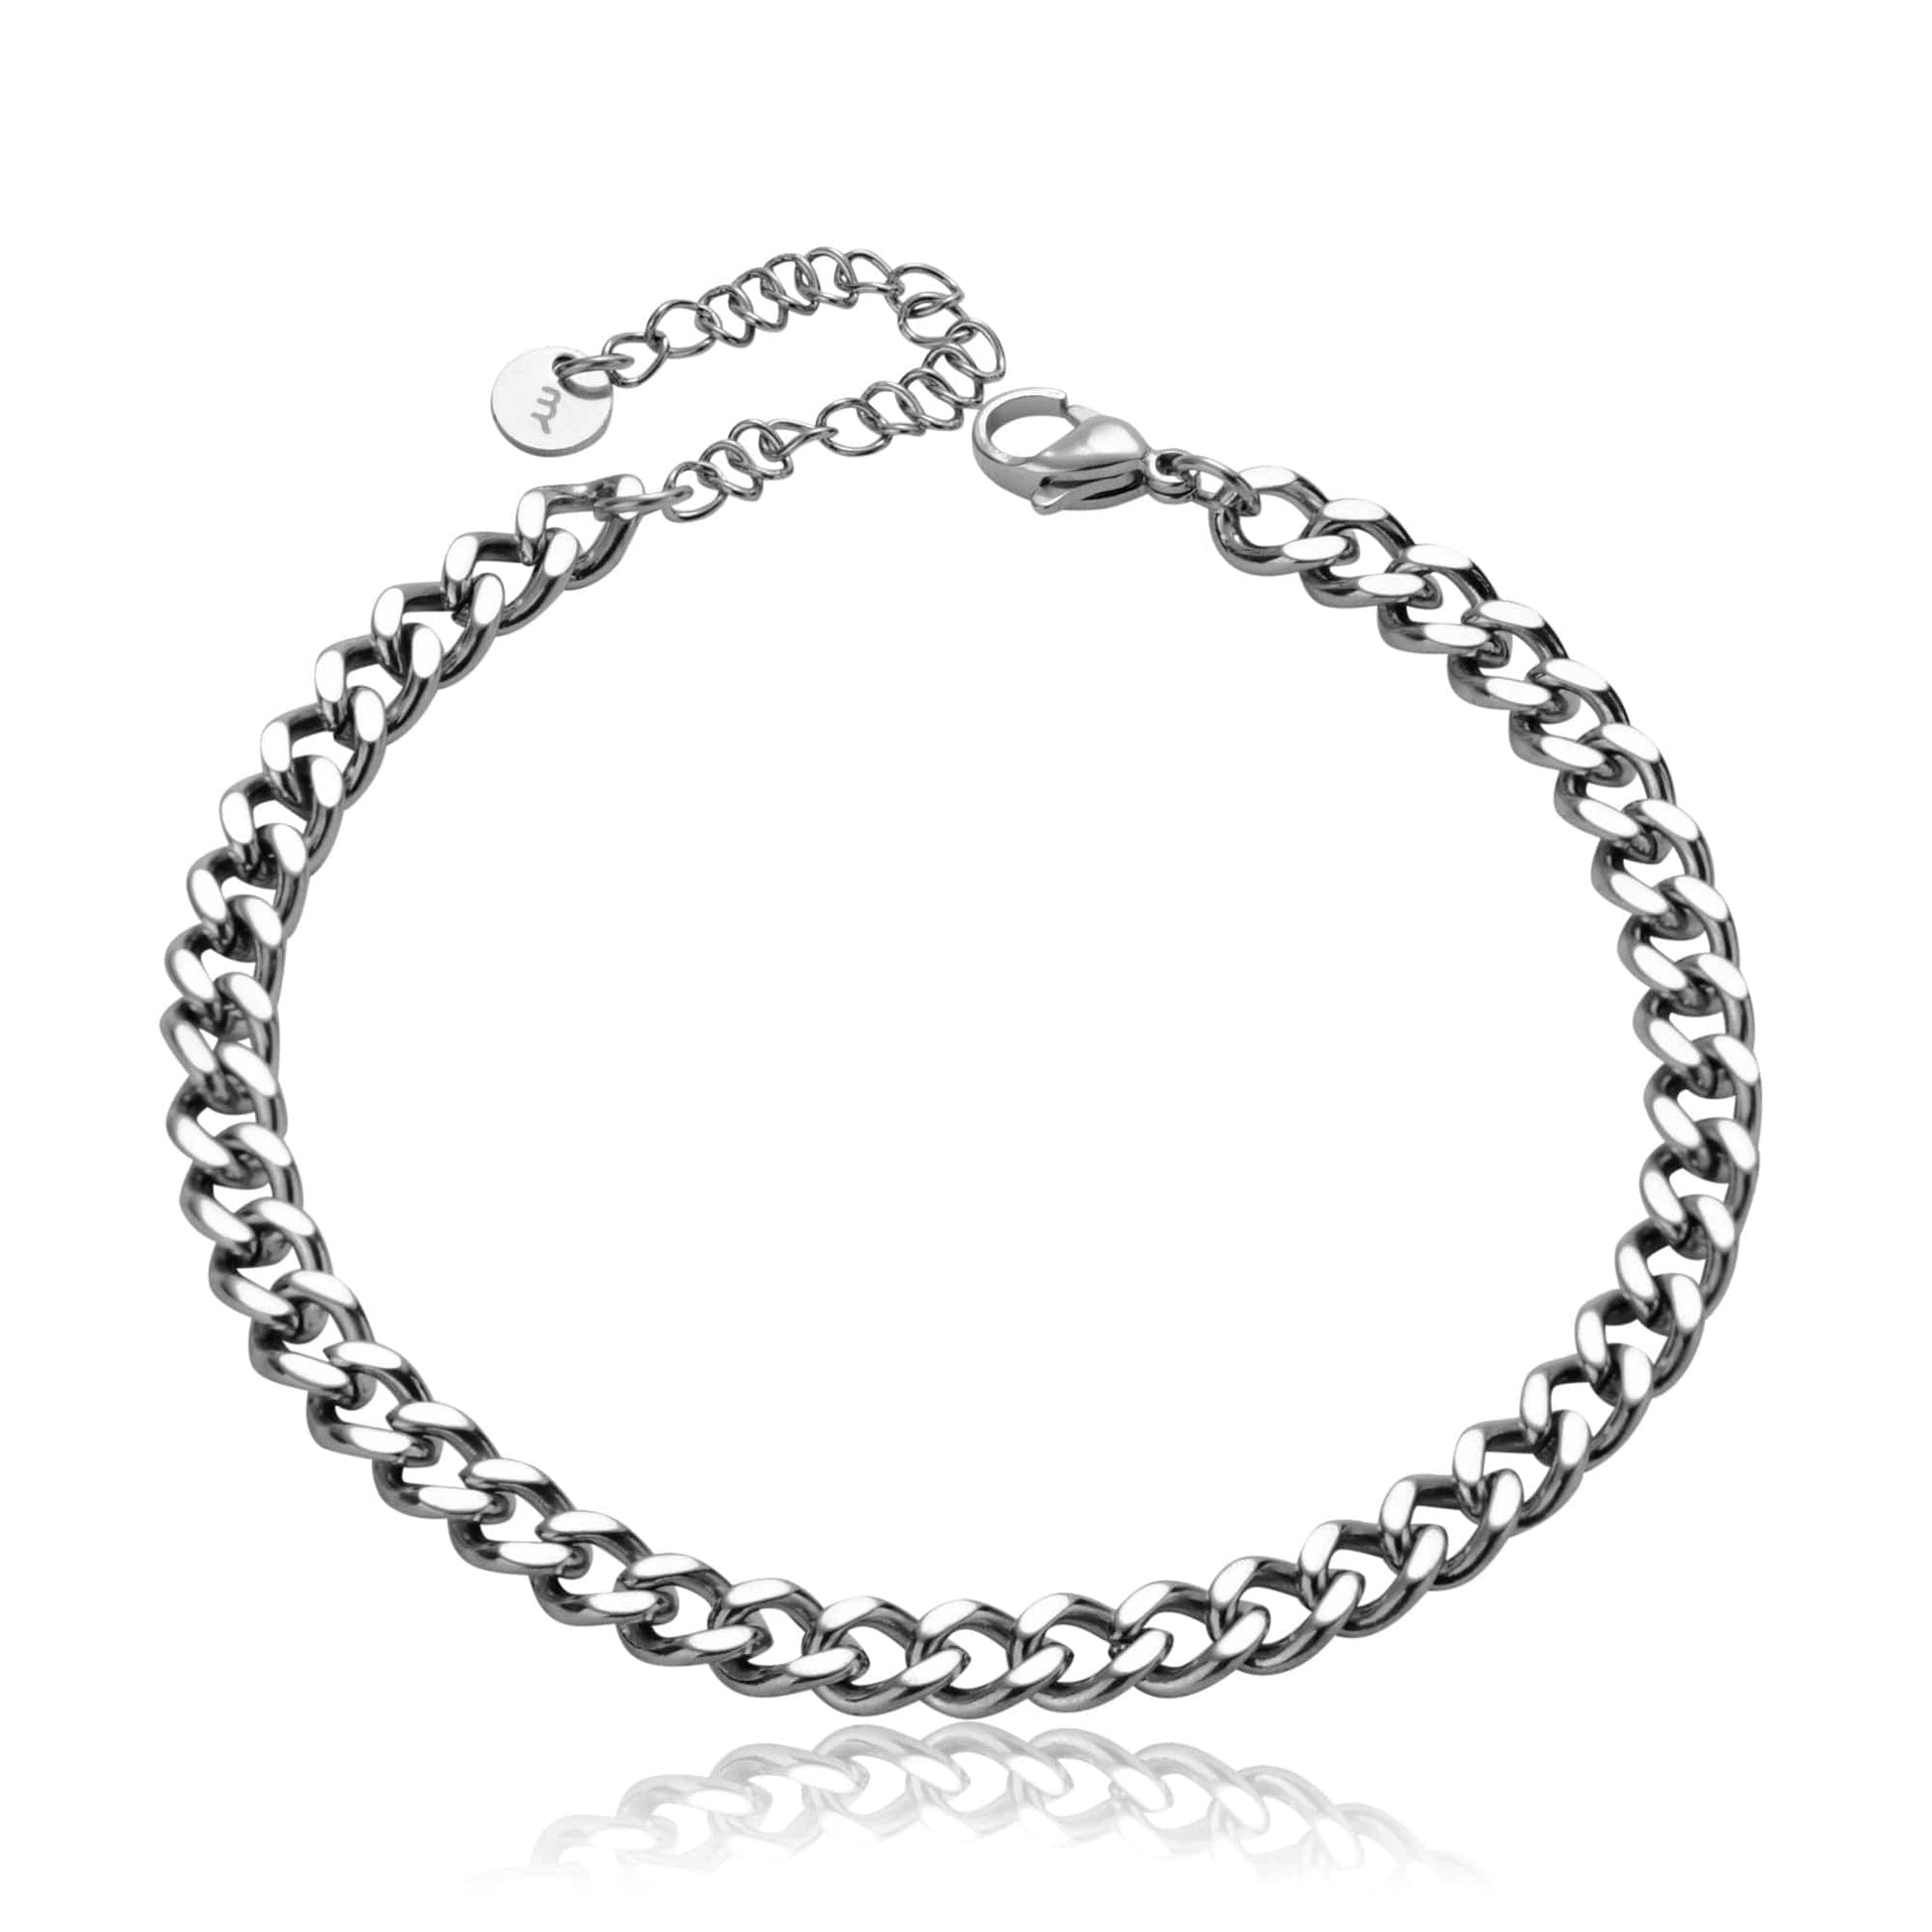 bianco rosso Bracelet Silver Chain Bracelet cyprus greece jewelry gift free shipping europe worldwide